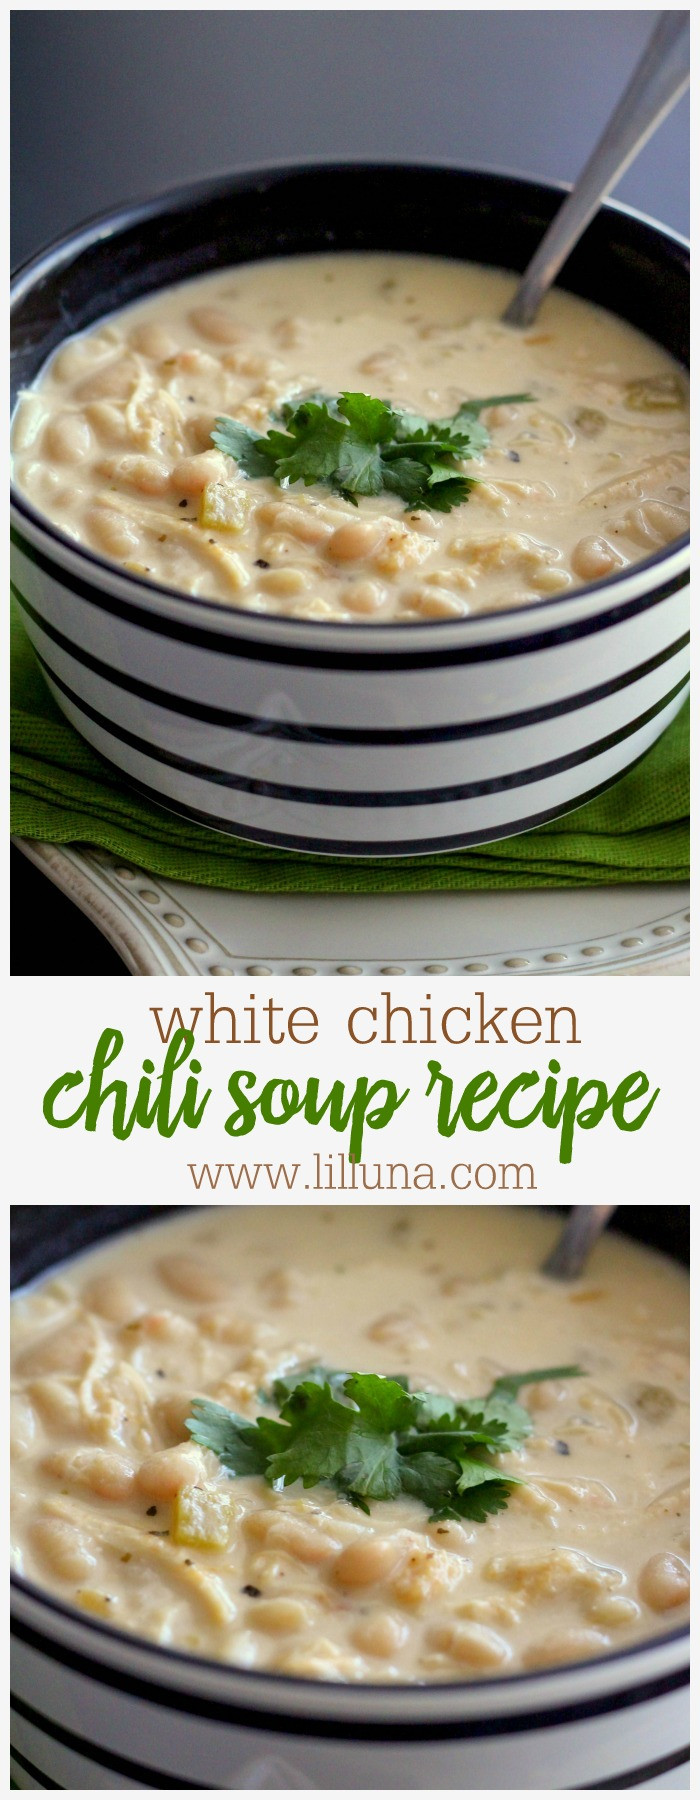 White Chicken Chili Recipes
 BEST White Chicken Chili Recipe